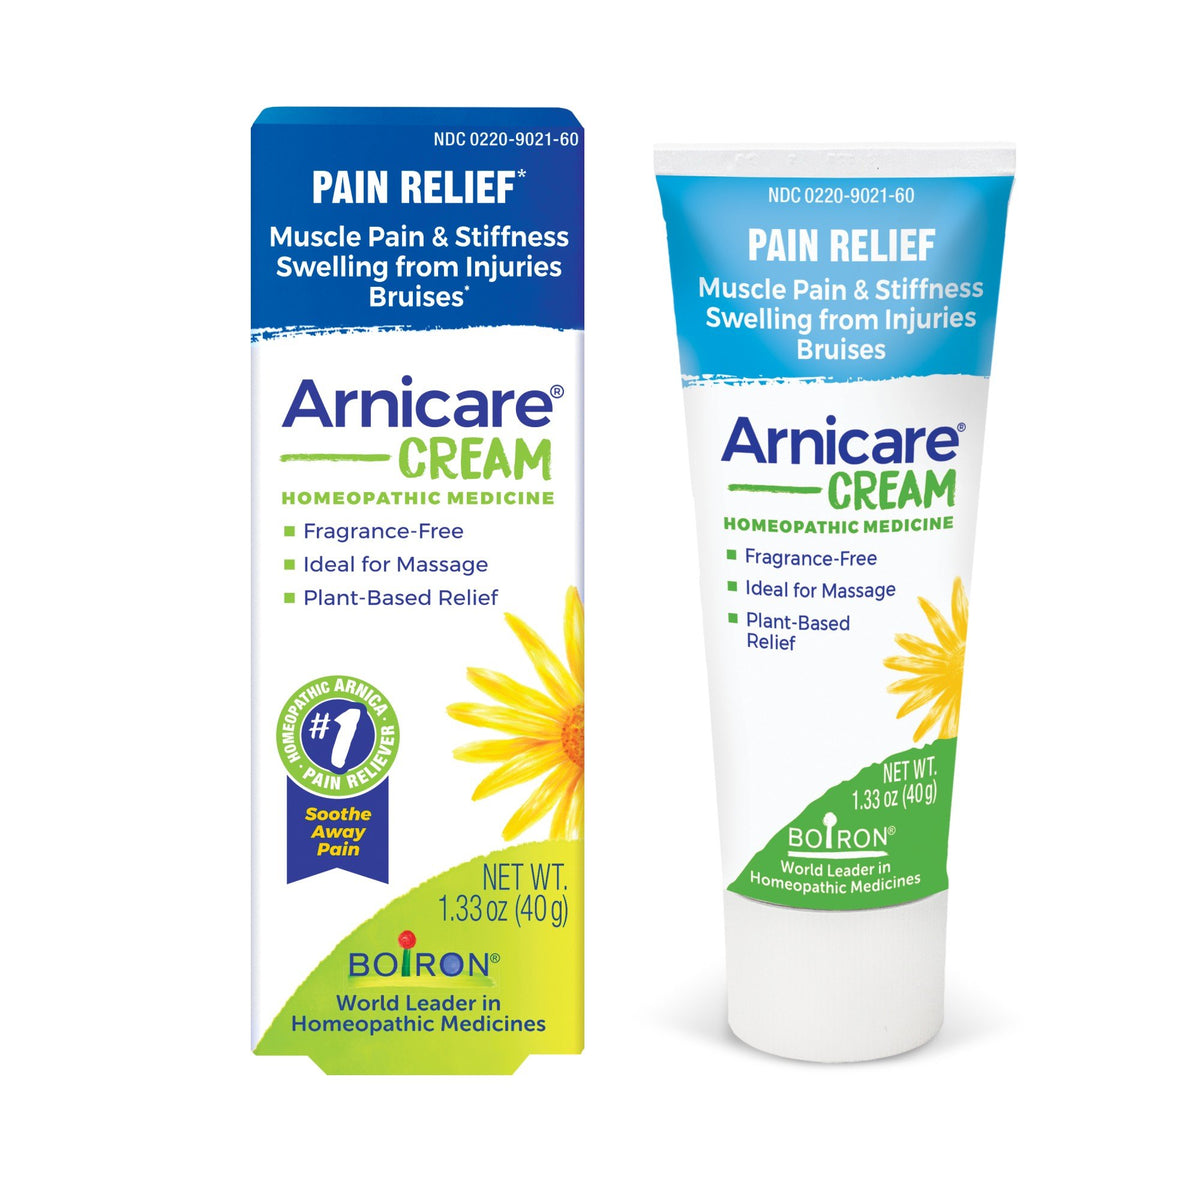 Boiron Arnicare Cream Homeopathic Medicine For Pain Relief 1.33 oz Cream